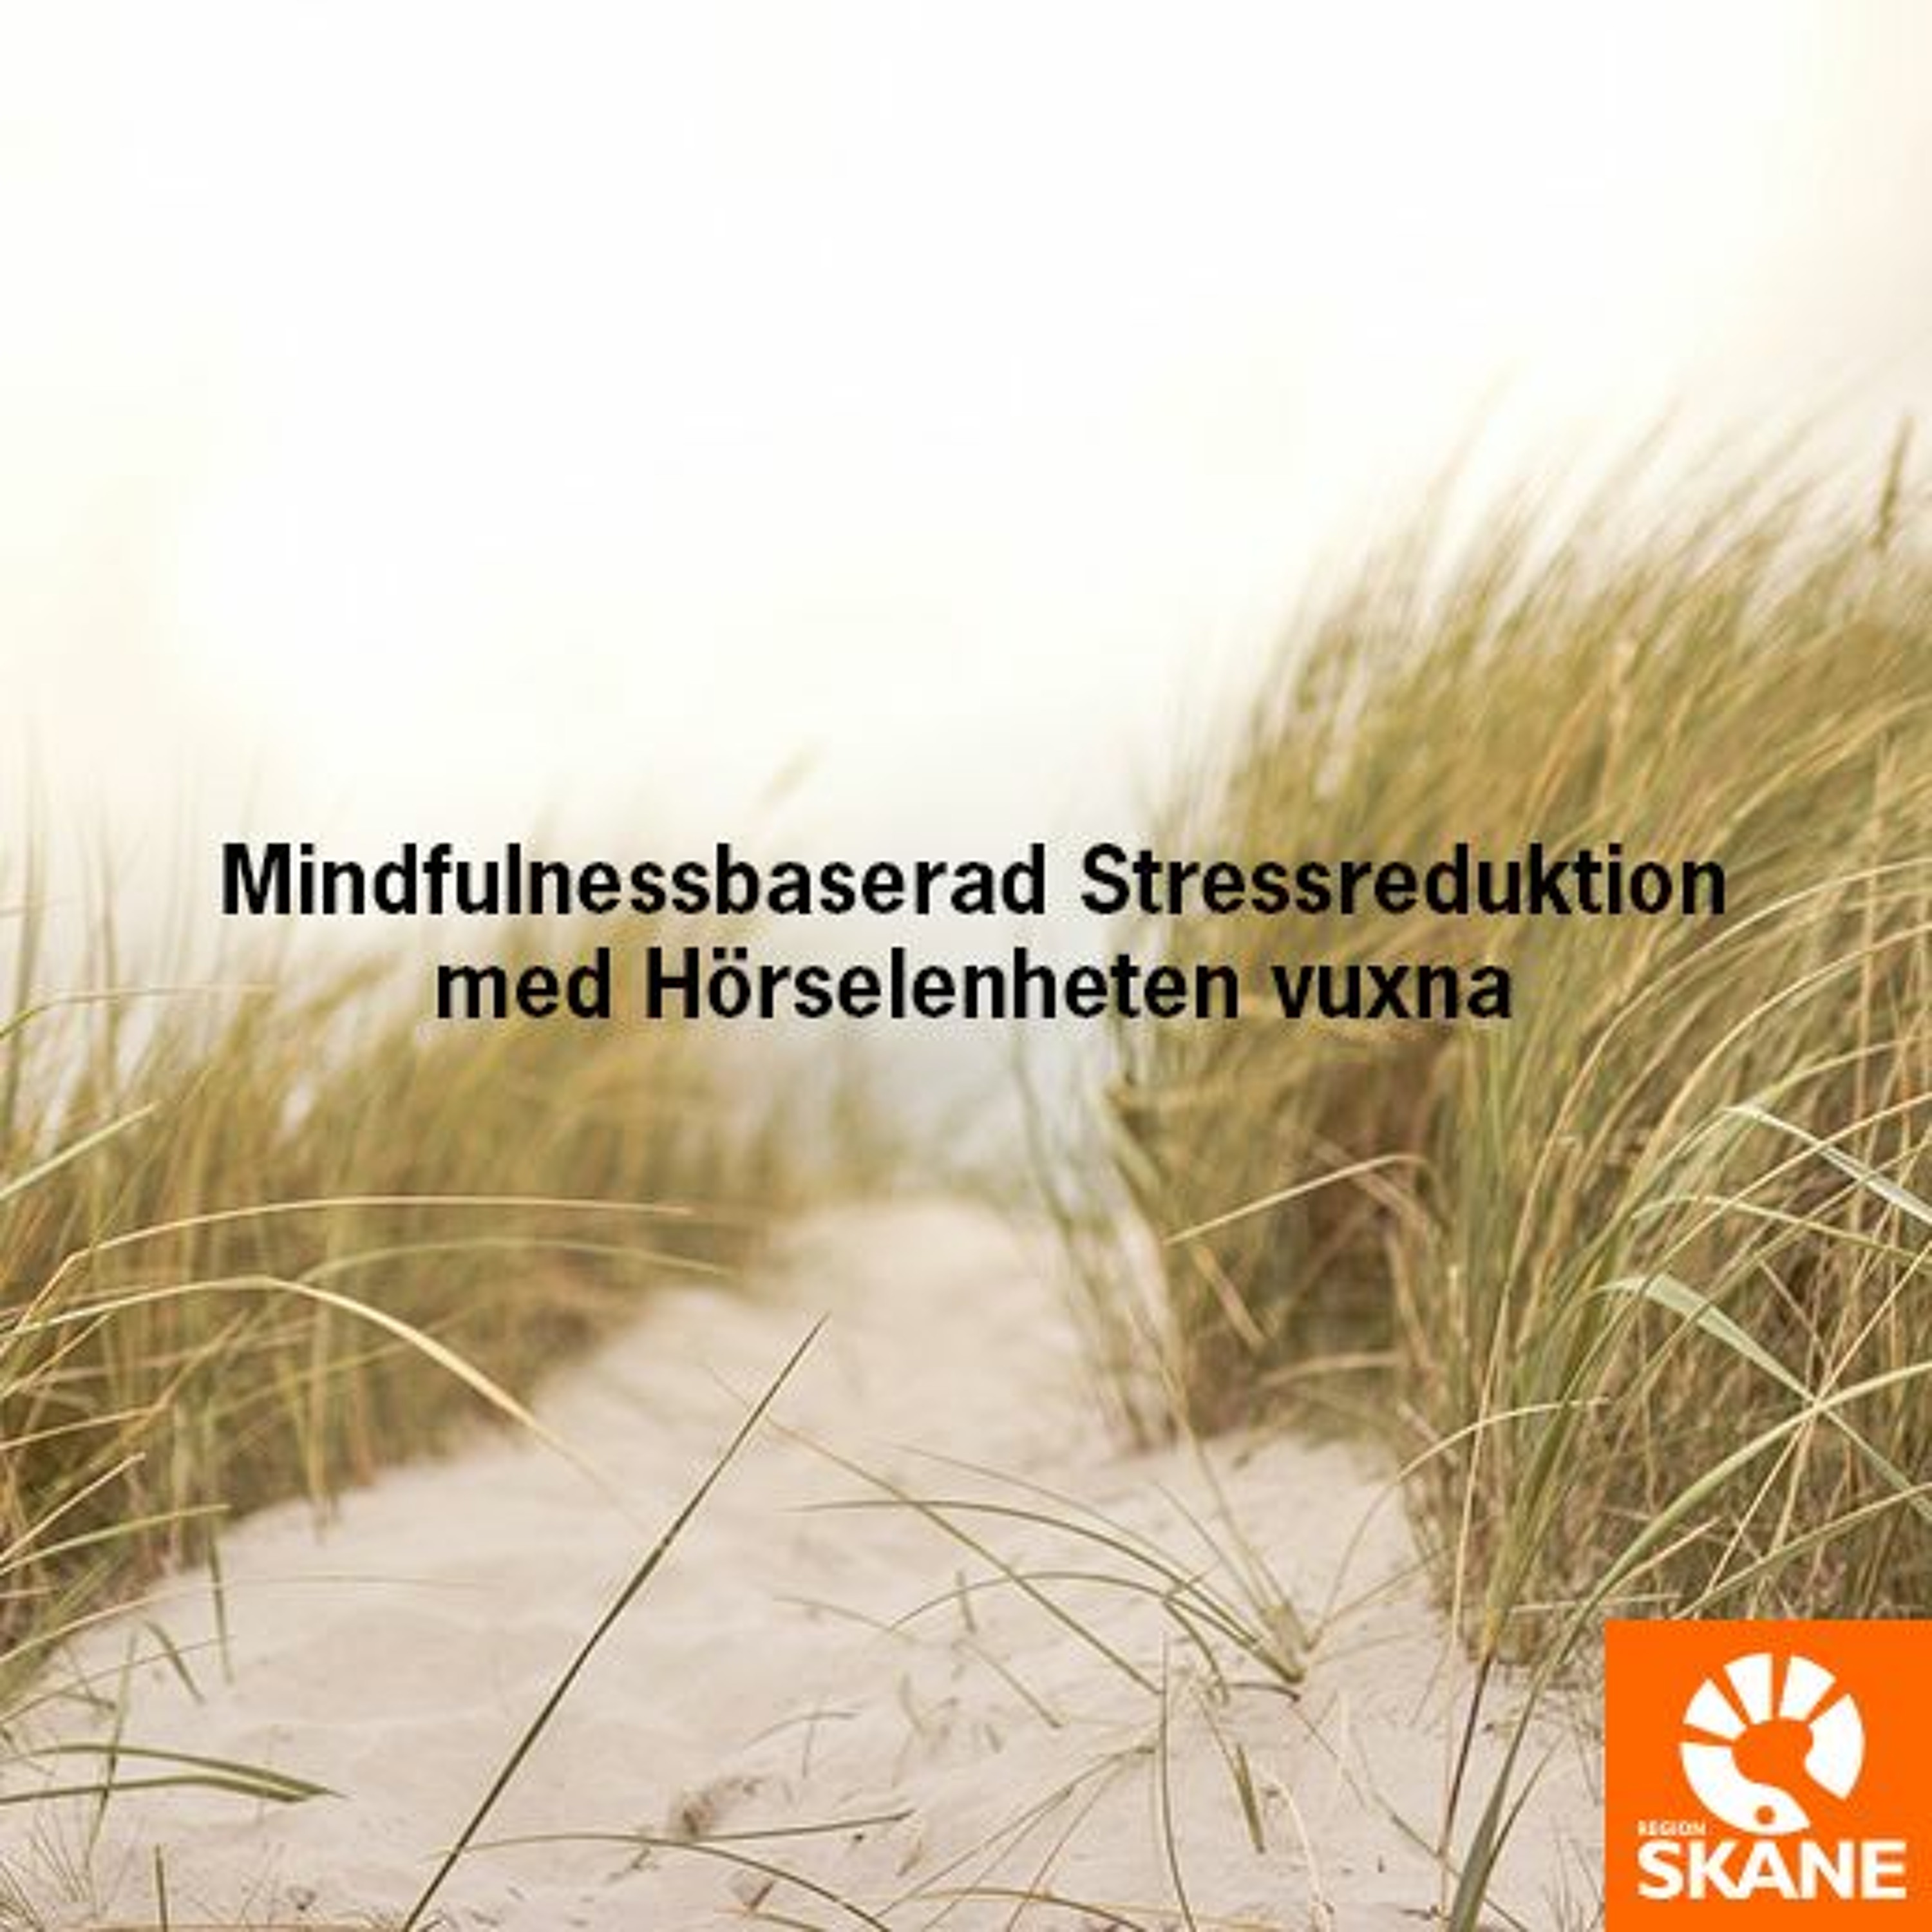 Mindfulnessbaserad Stressreduktion - Kroppsskanning